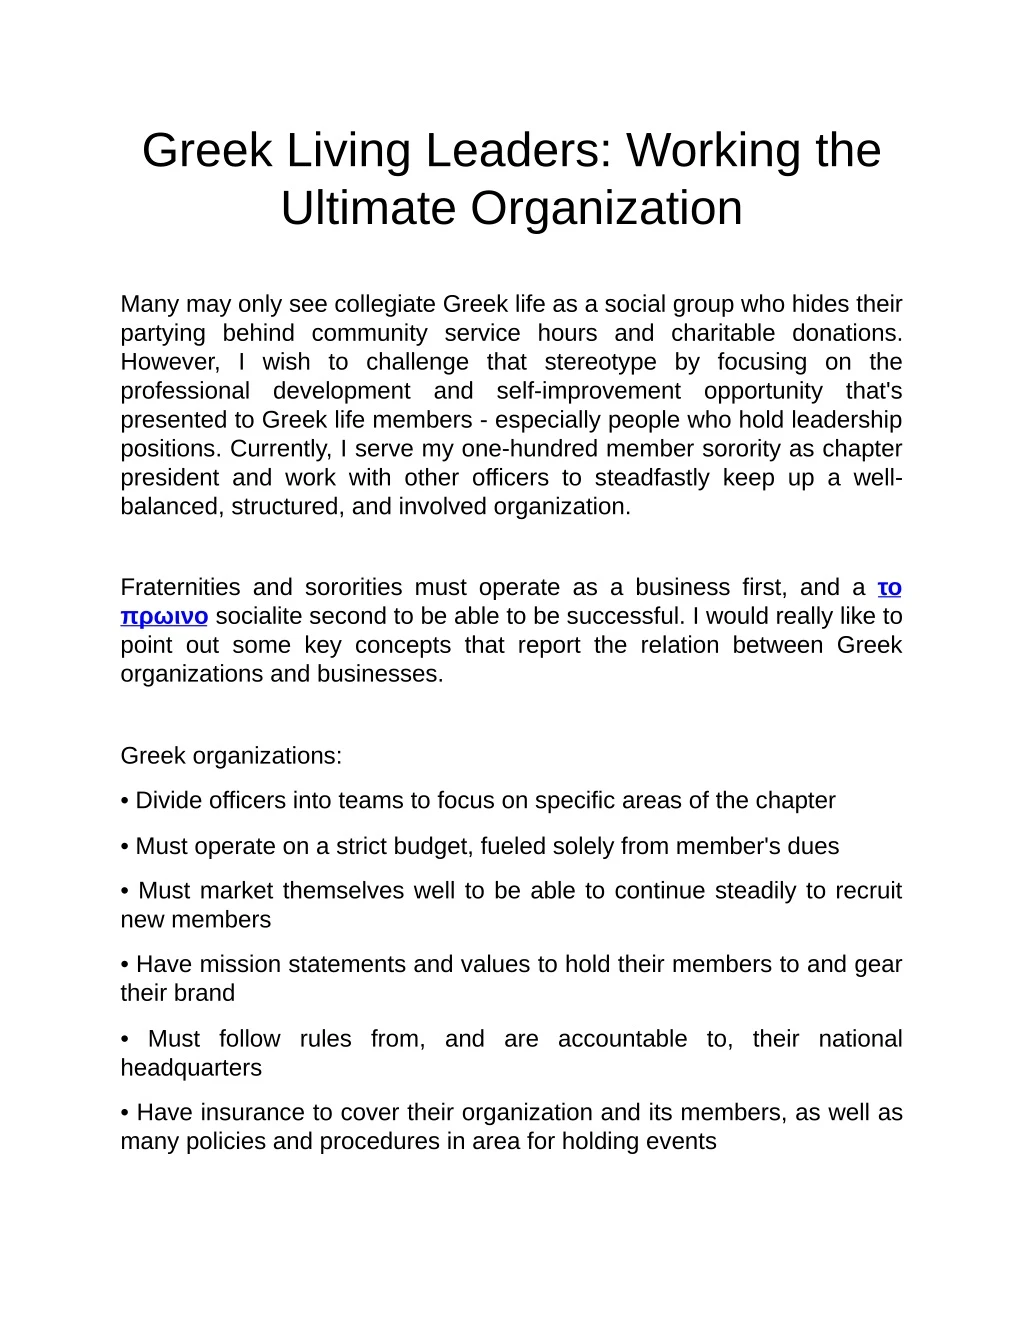 greeklivingleaders workingthe ultimateorganization